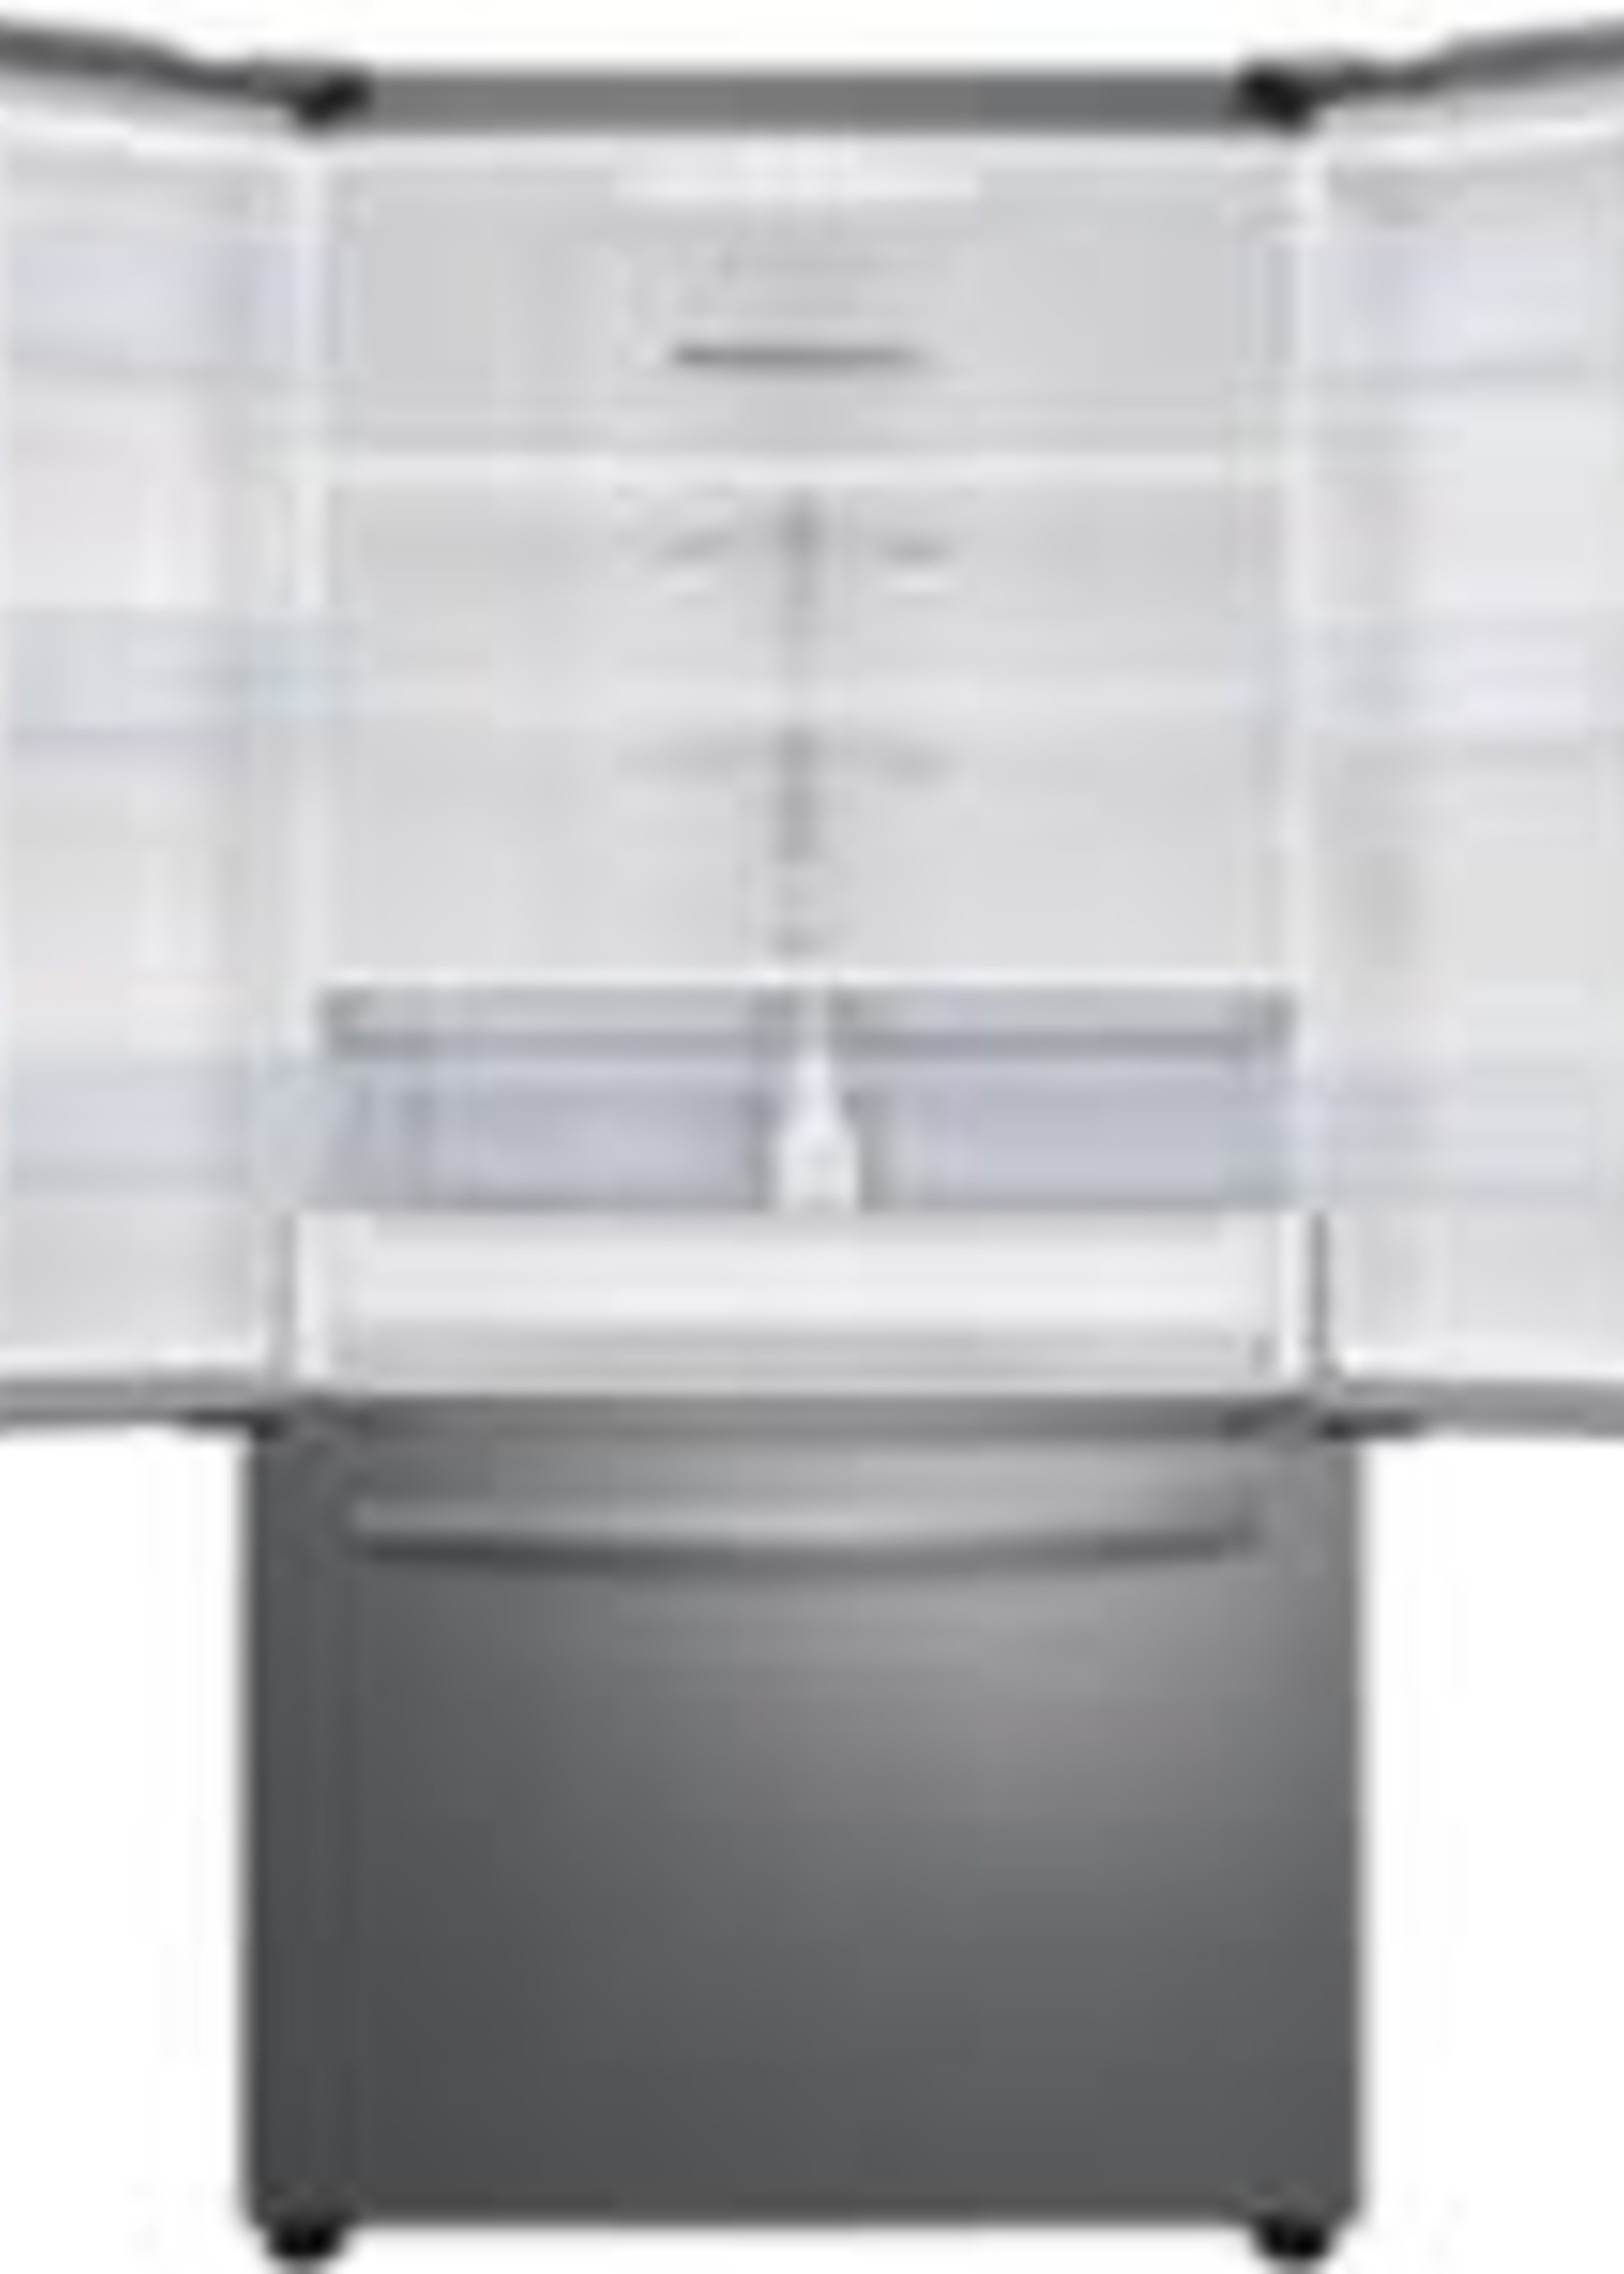 Samsung **Samsung   RF28T5001SR  (NIB)  28.2-cu ft French Door Refrigerator with Ice Maker (Fingerprint Resistant Stainless Steel)